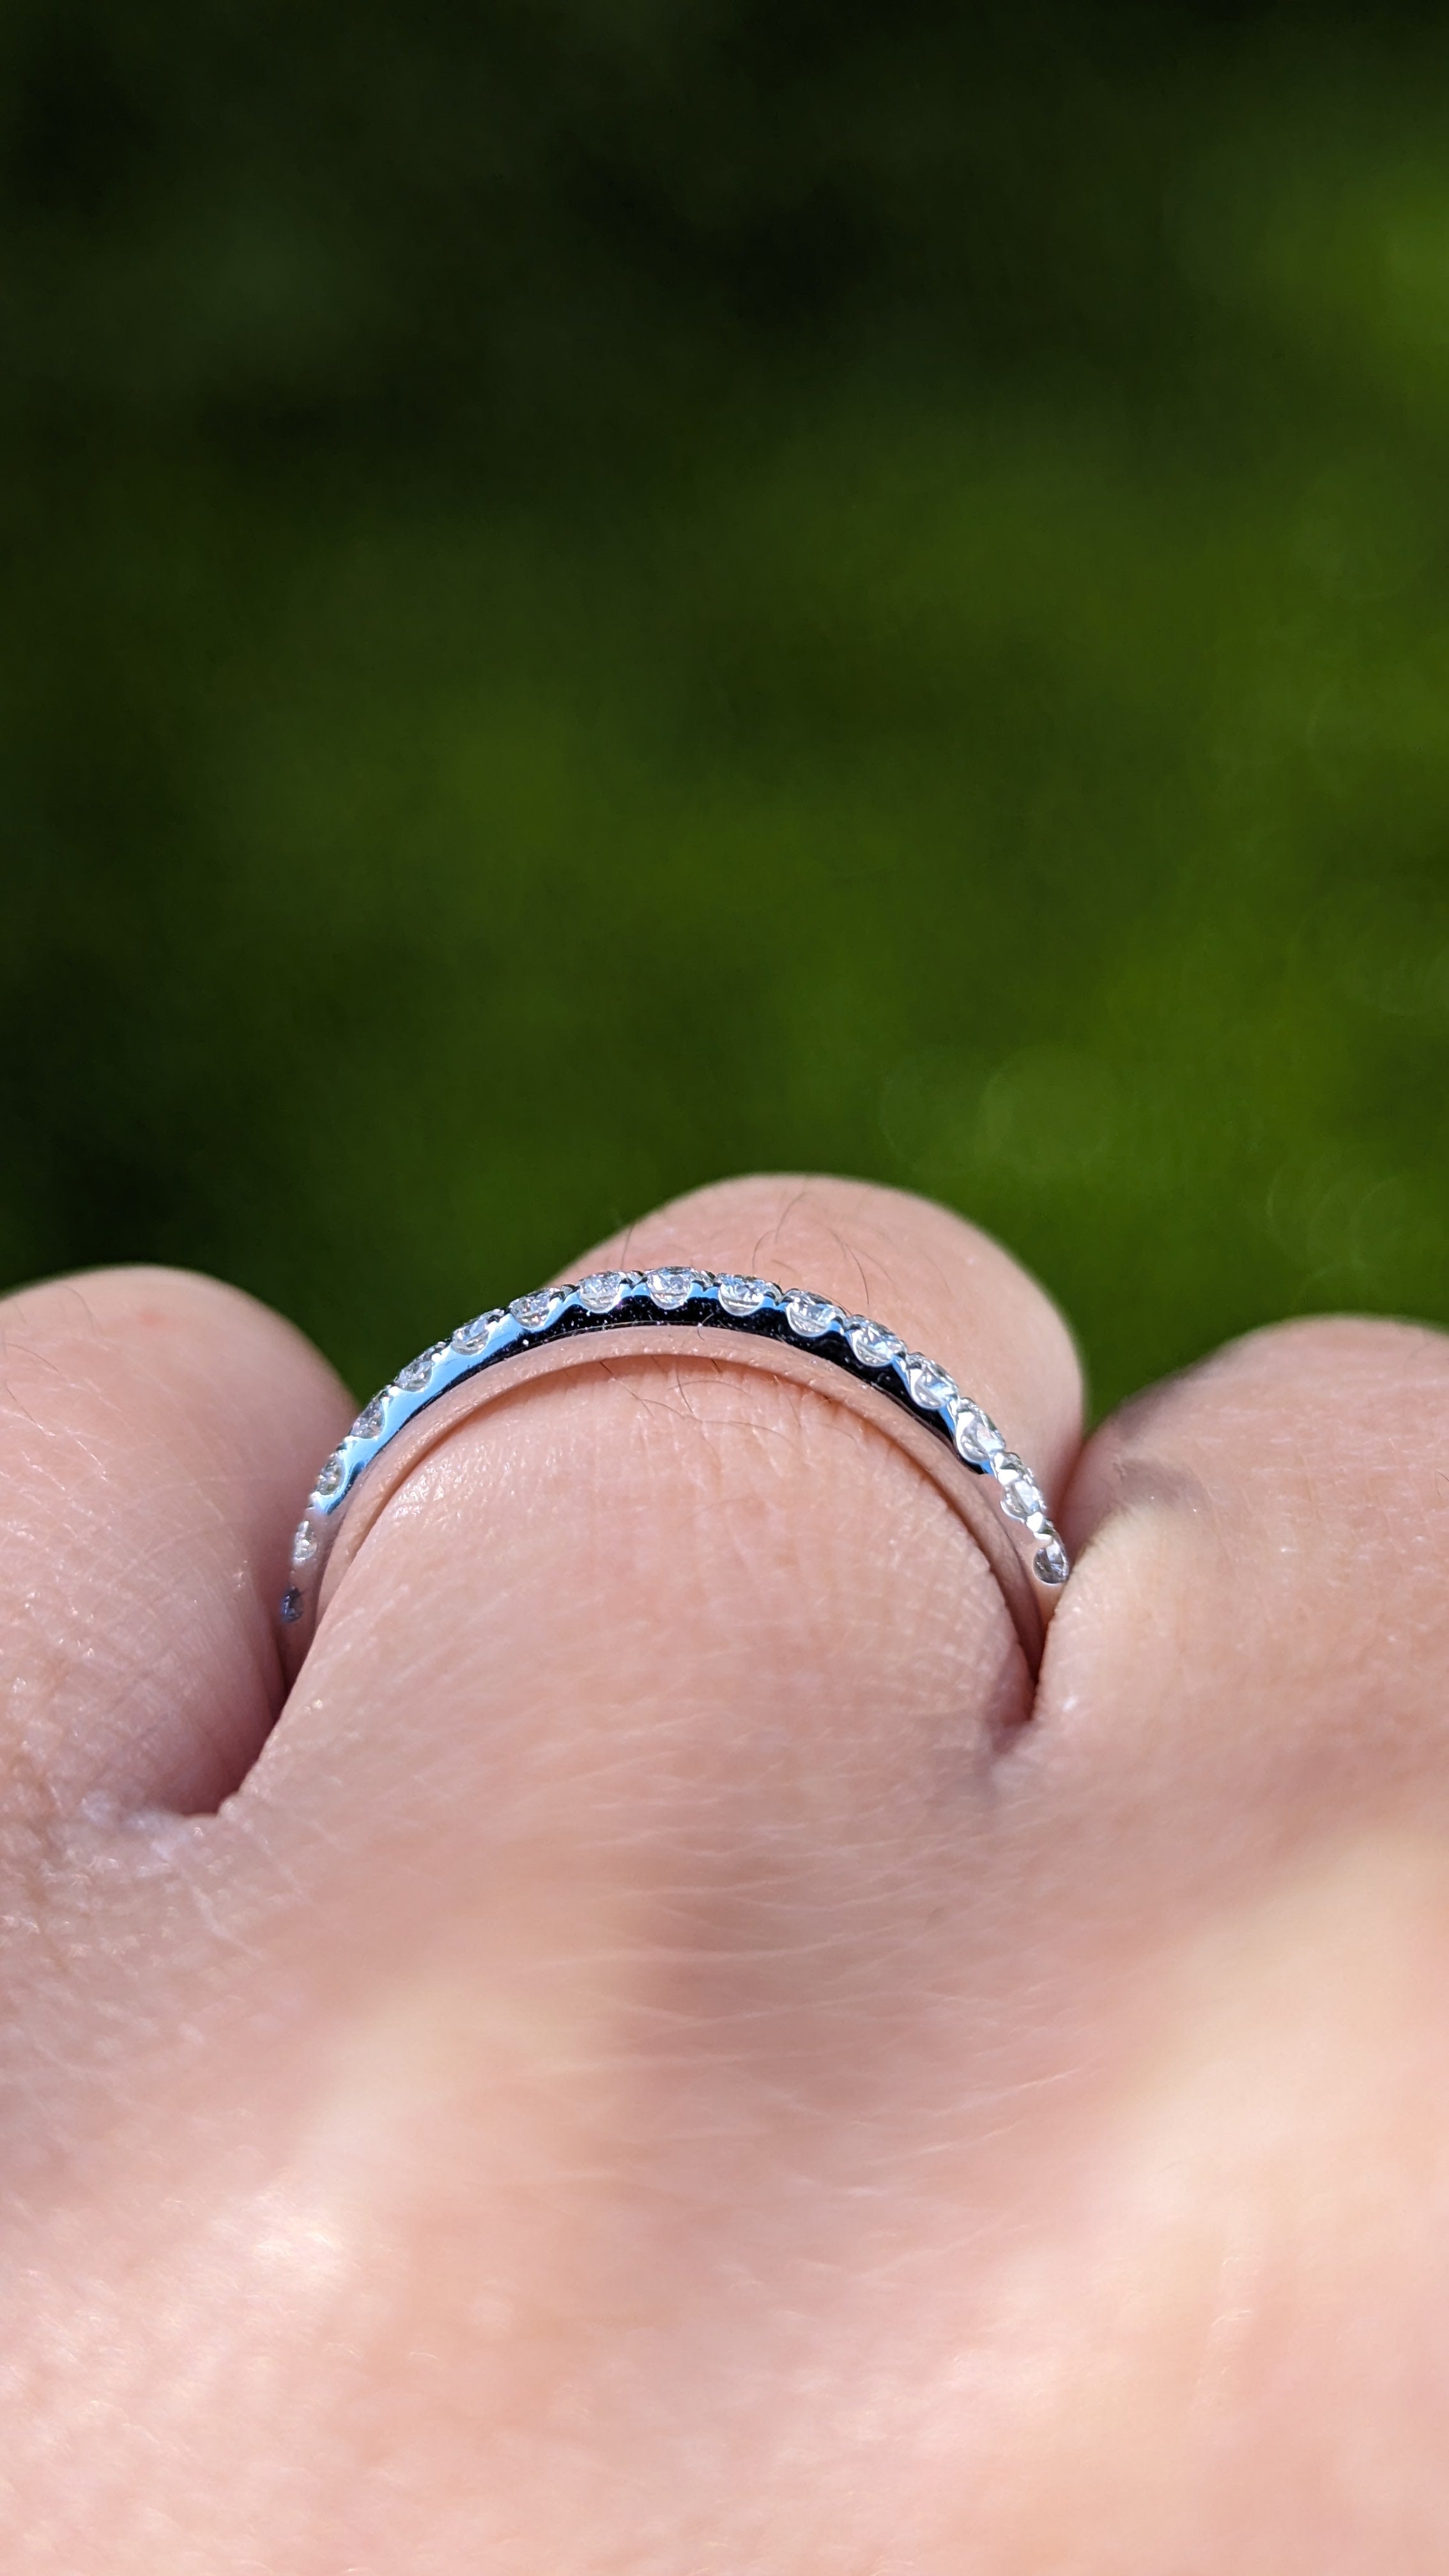 14k White Gold 2mm Diamond Wedding Band Ring Brilliant Cut 0.33 carats